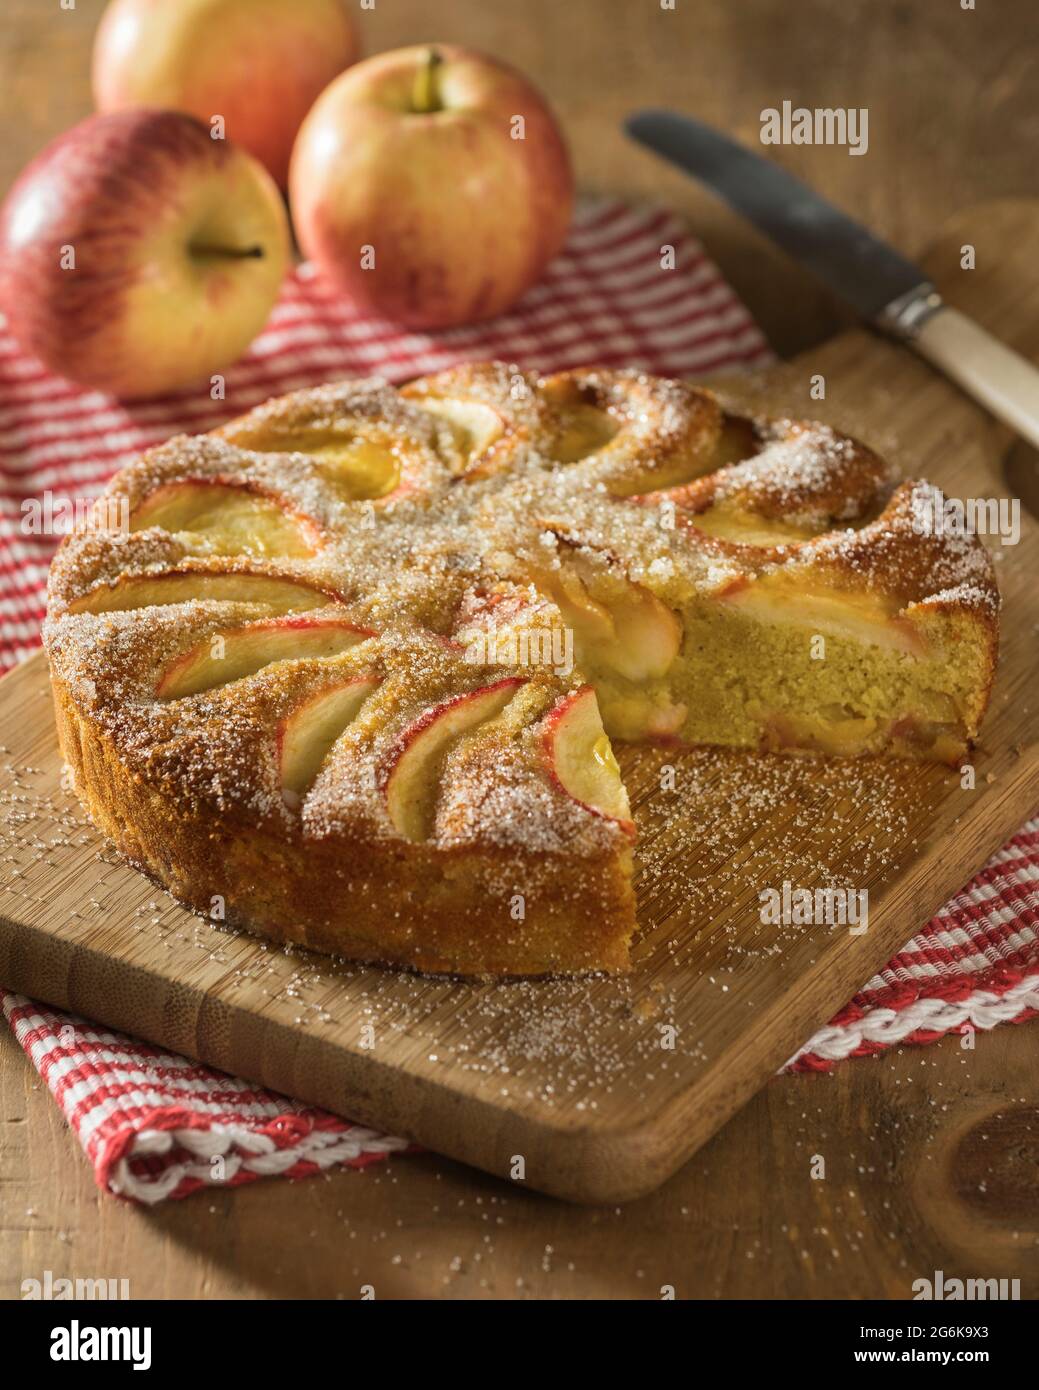 Gâteau fermière aux pommes. French apple cake. France Food Stock Photo